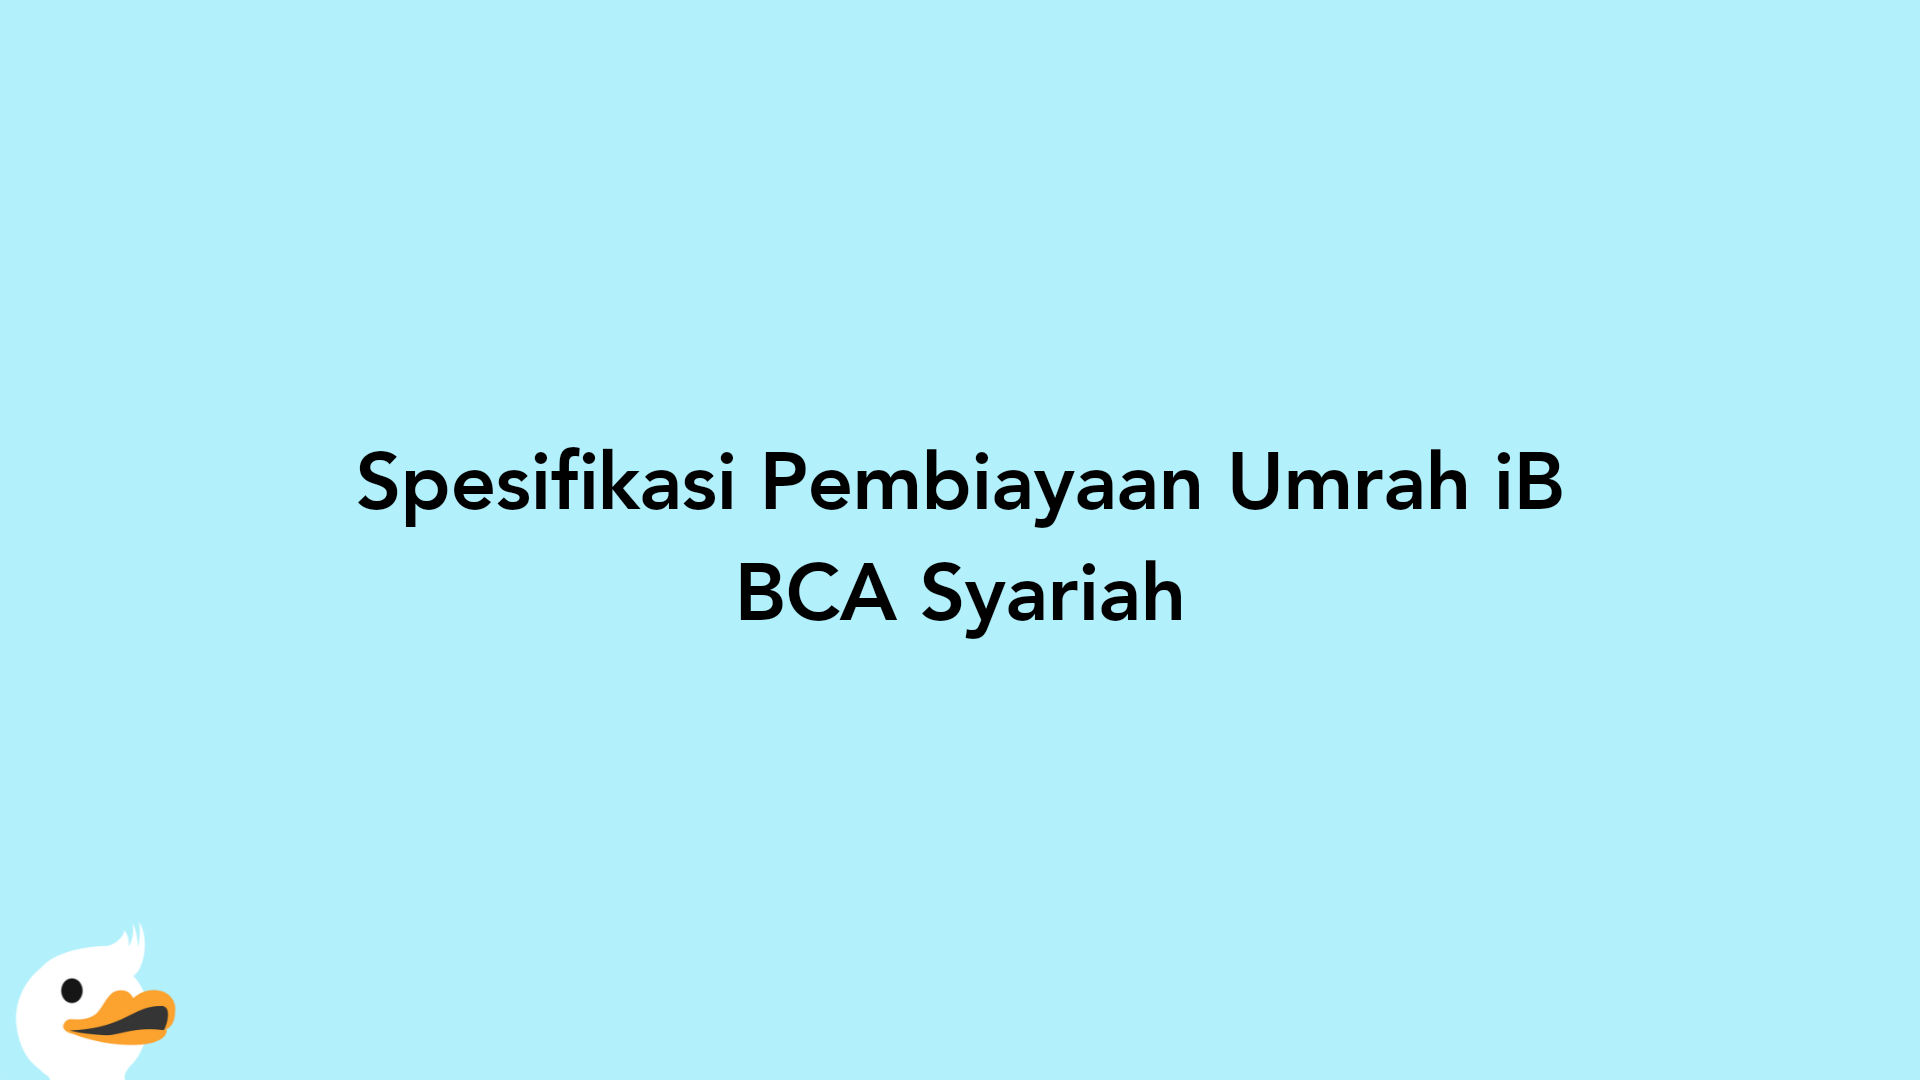 Spesifikasi Pembiayaan Umrah iB BCA Syariah